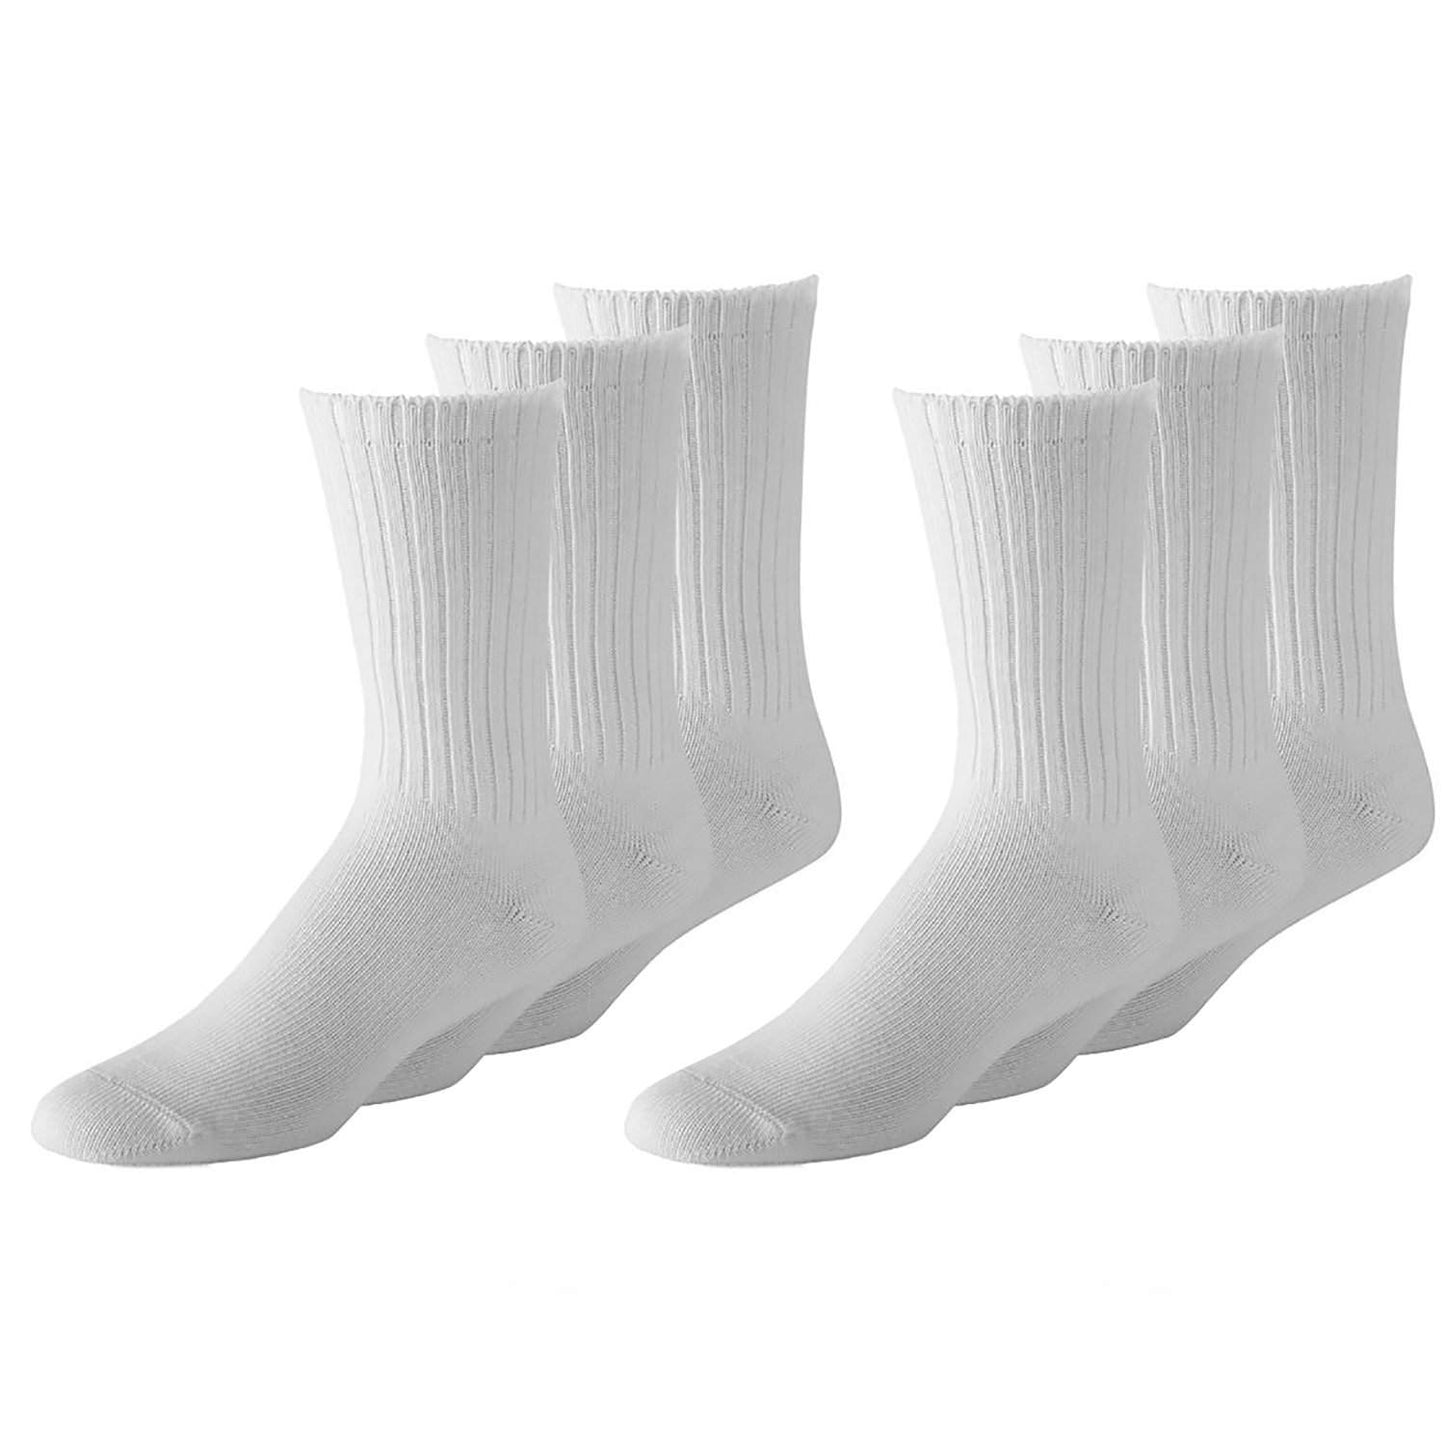 Mechaly Unisex Crew Athletic Sports Cotton Socks 25 Pack